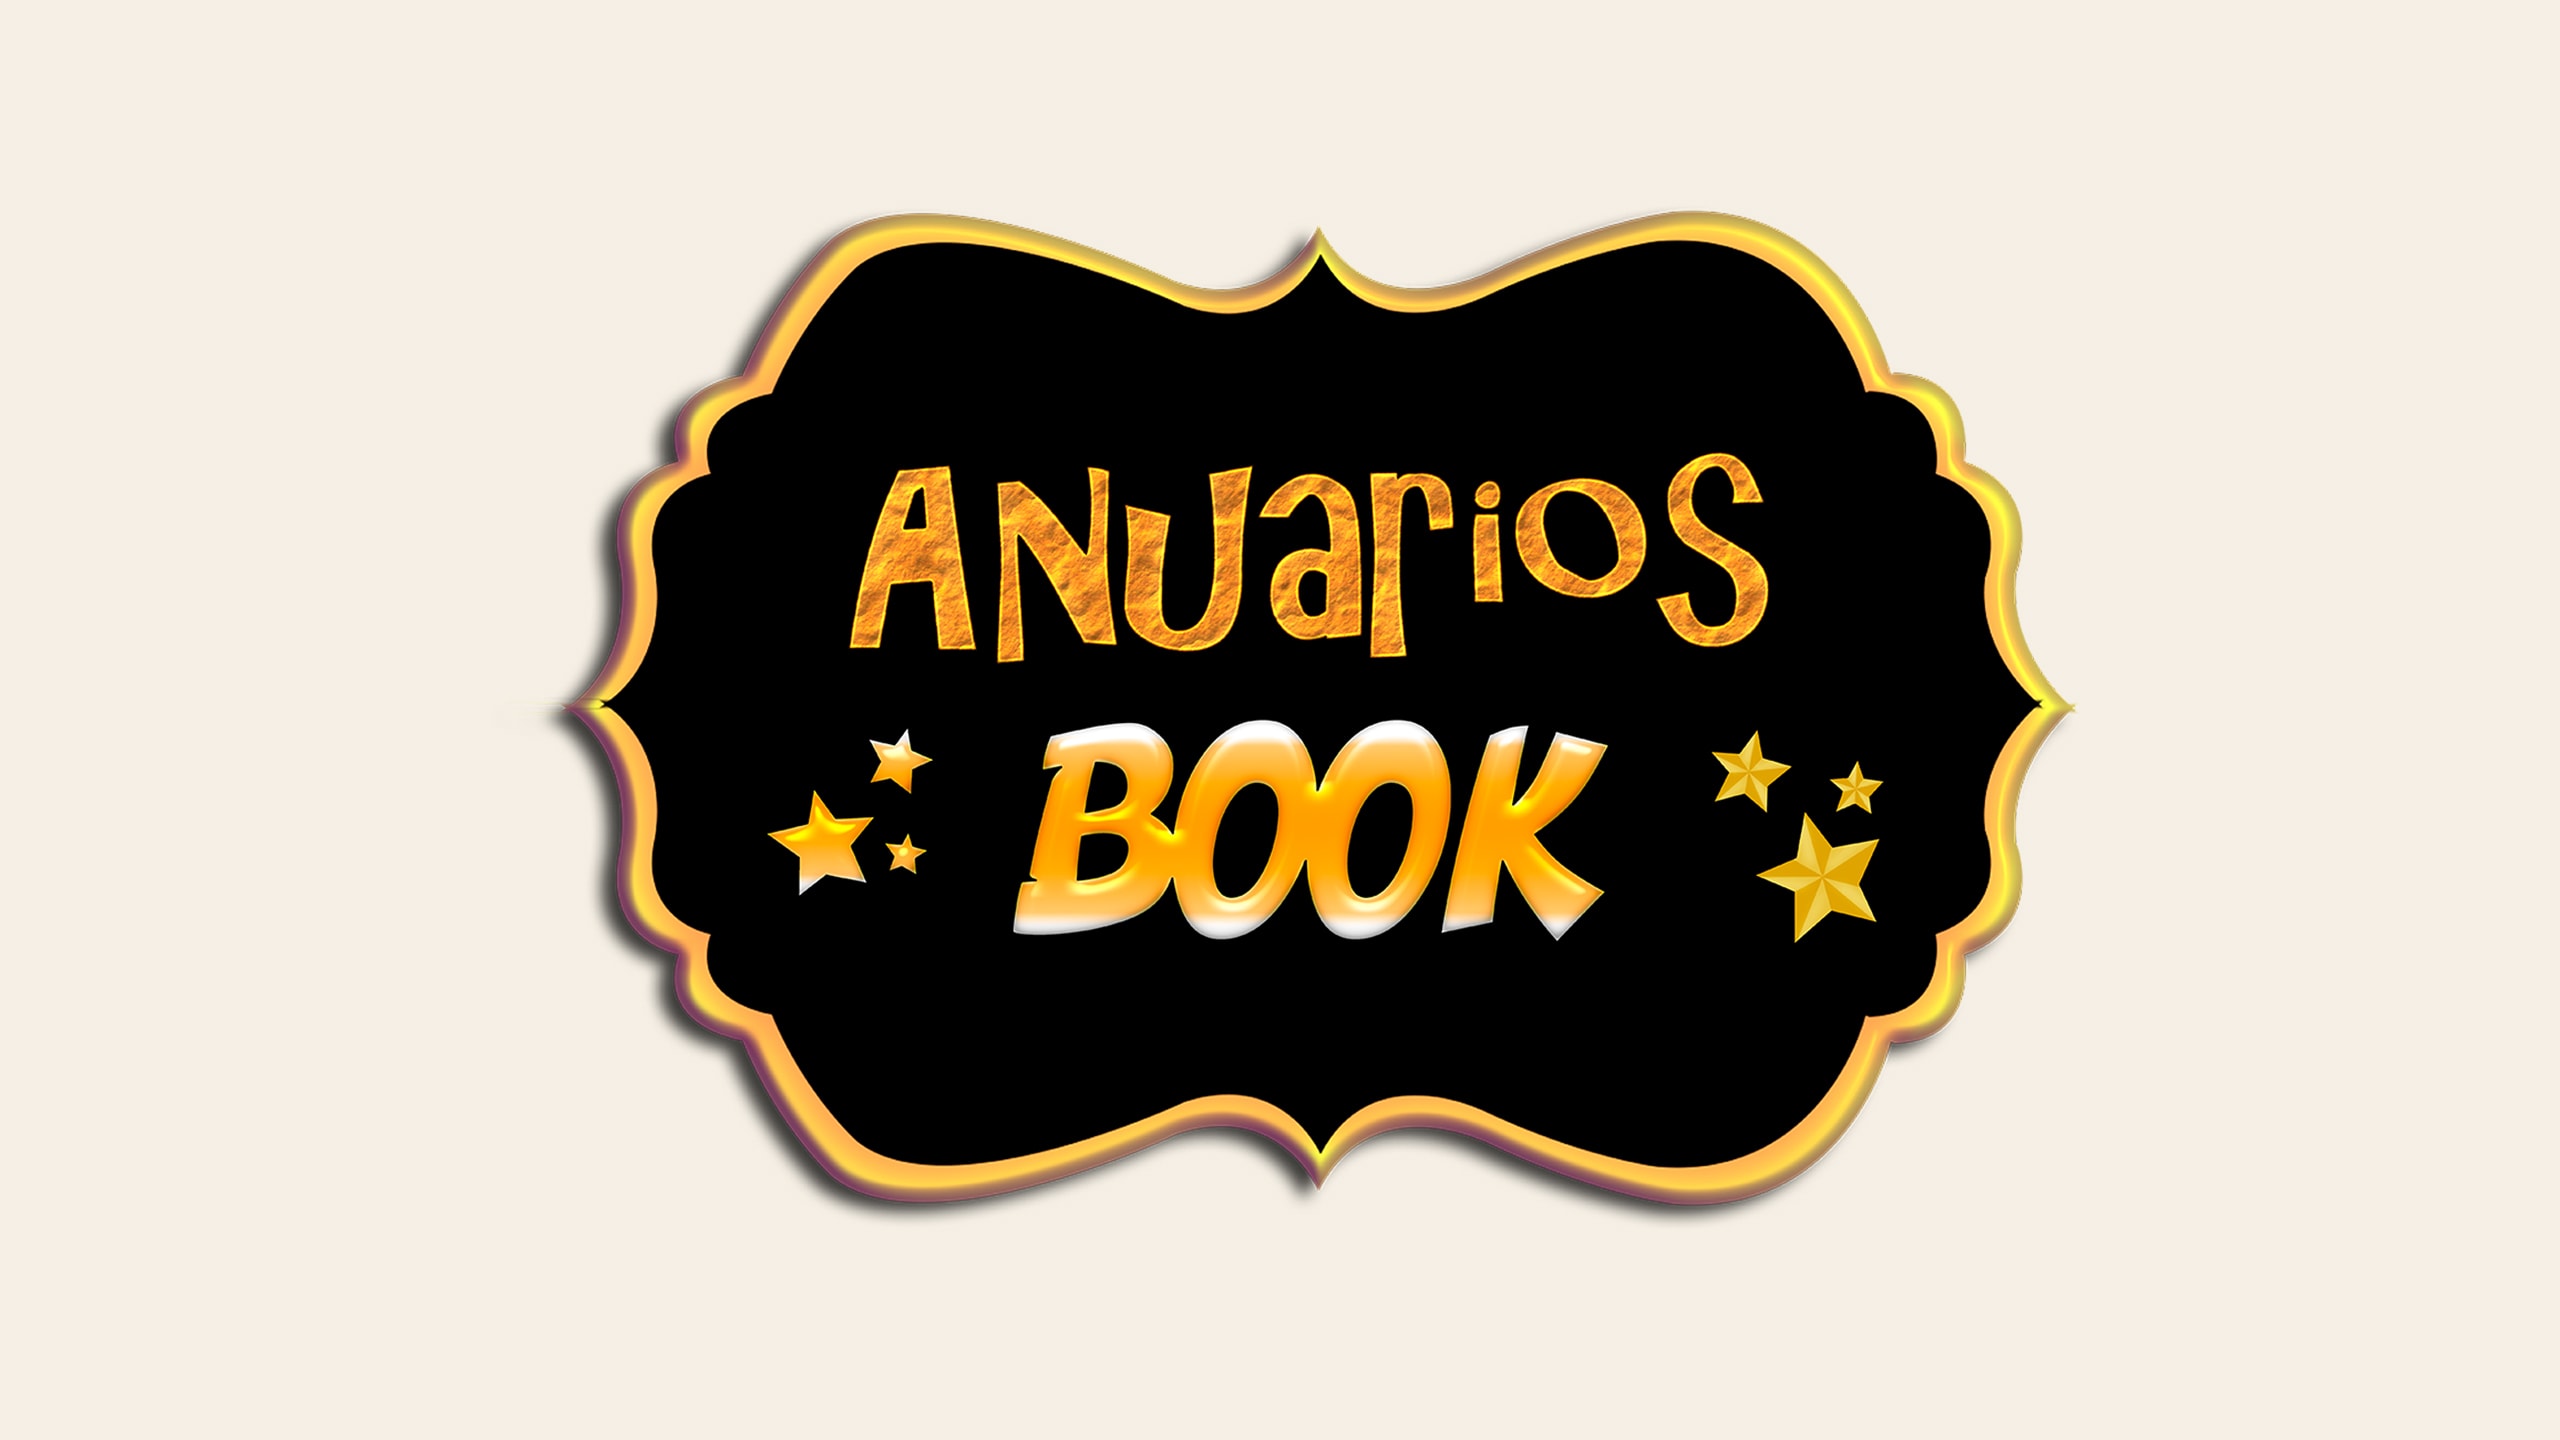 Anuarios Book